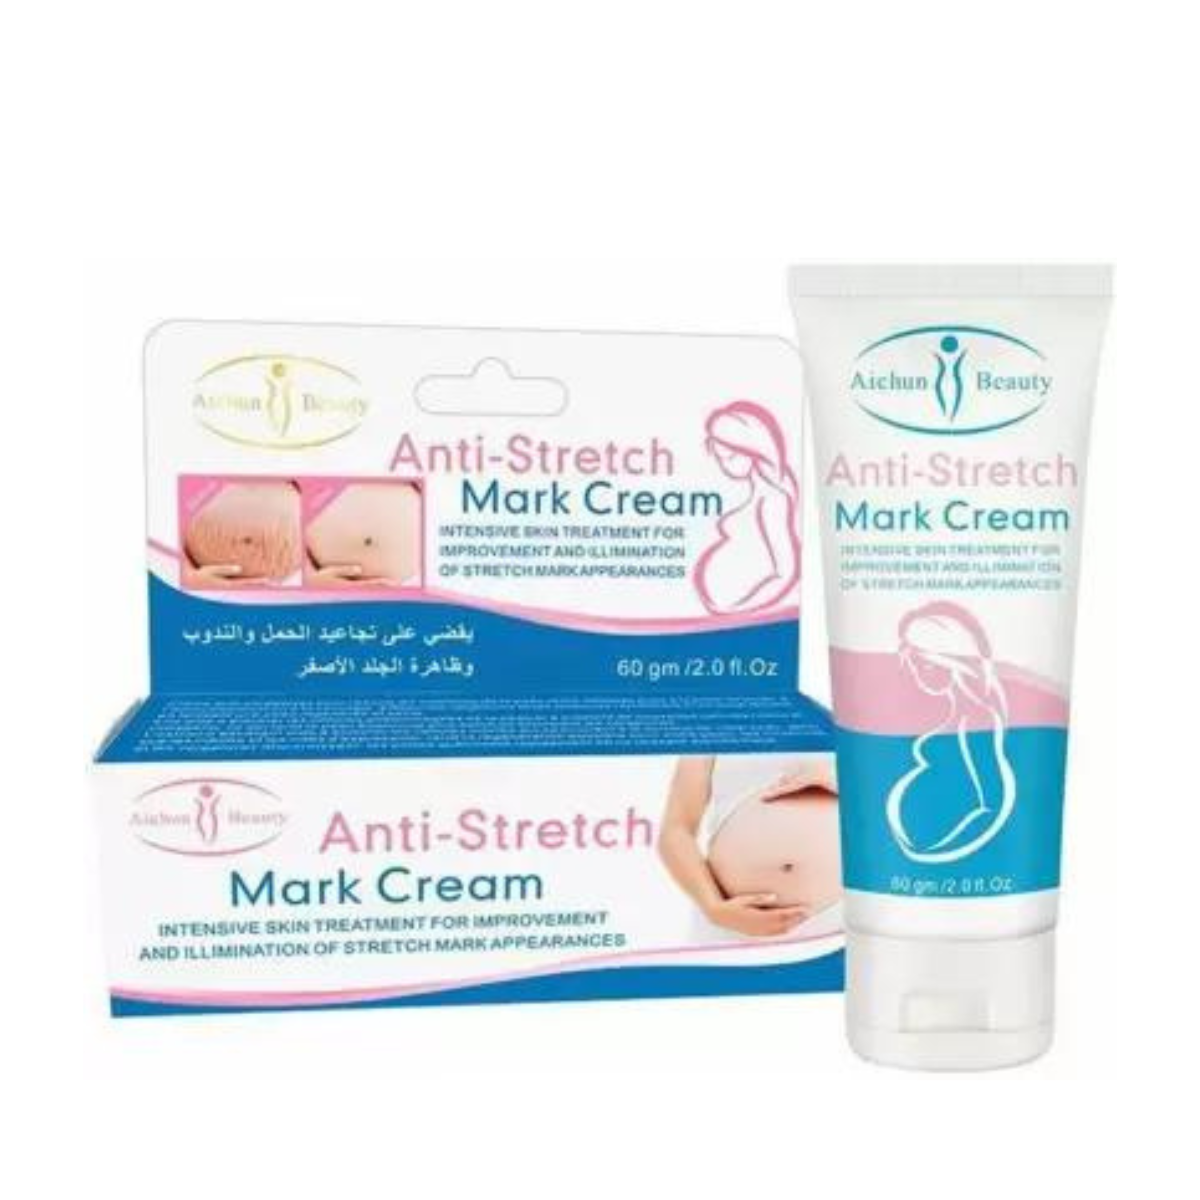 Aichun Beauty Anti Stretch Mark Cream - Intensive Skin Treatment for Improvement & Elimination (60 g)